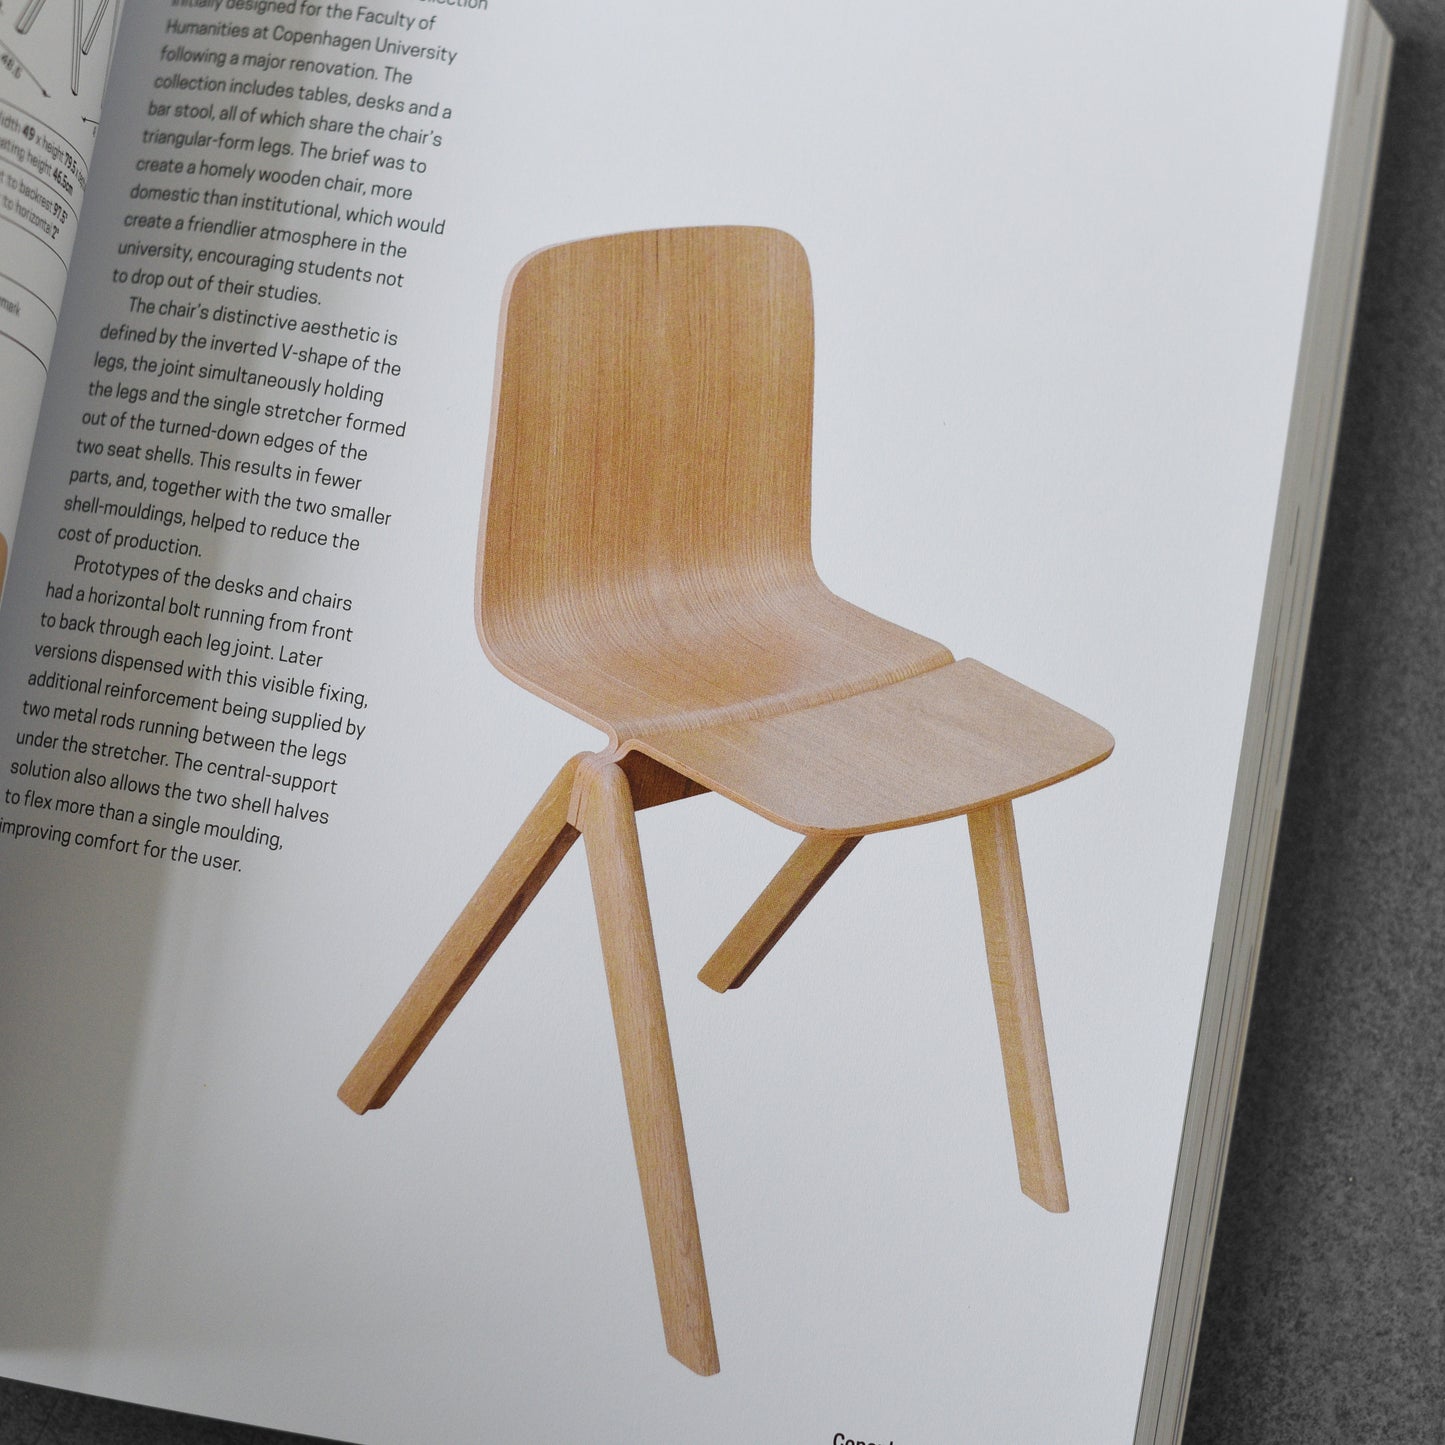 Chair Anatomy: Design & Construction - James Orrom